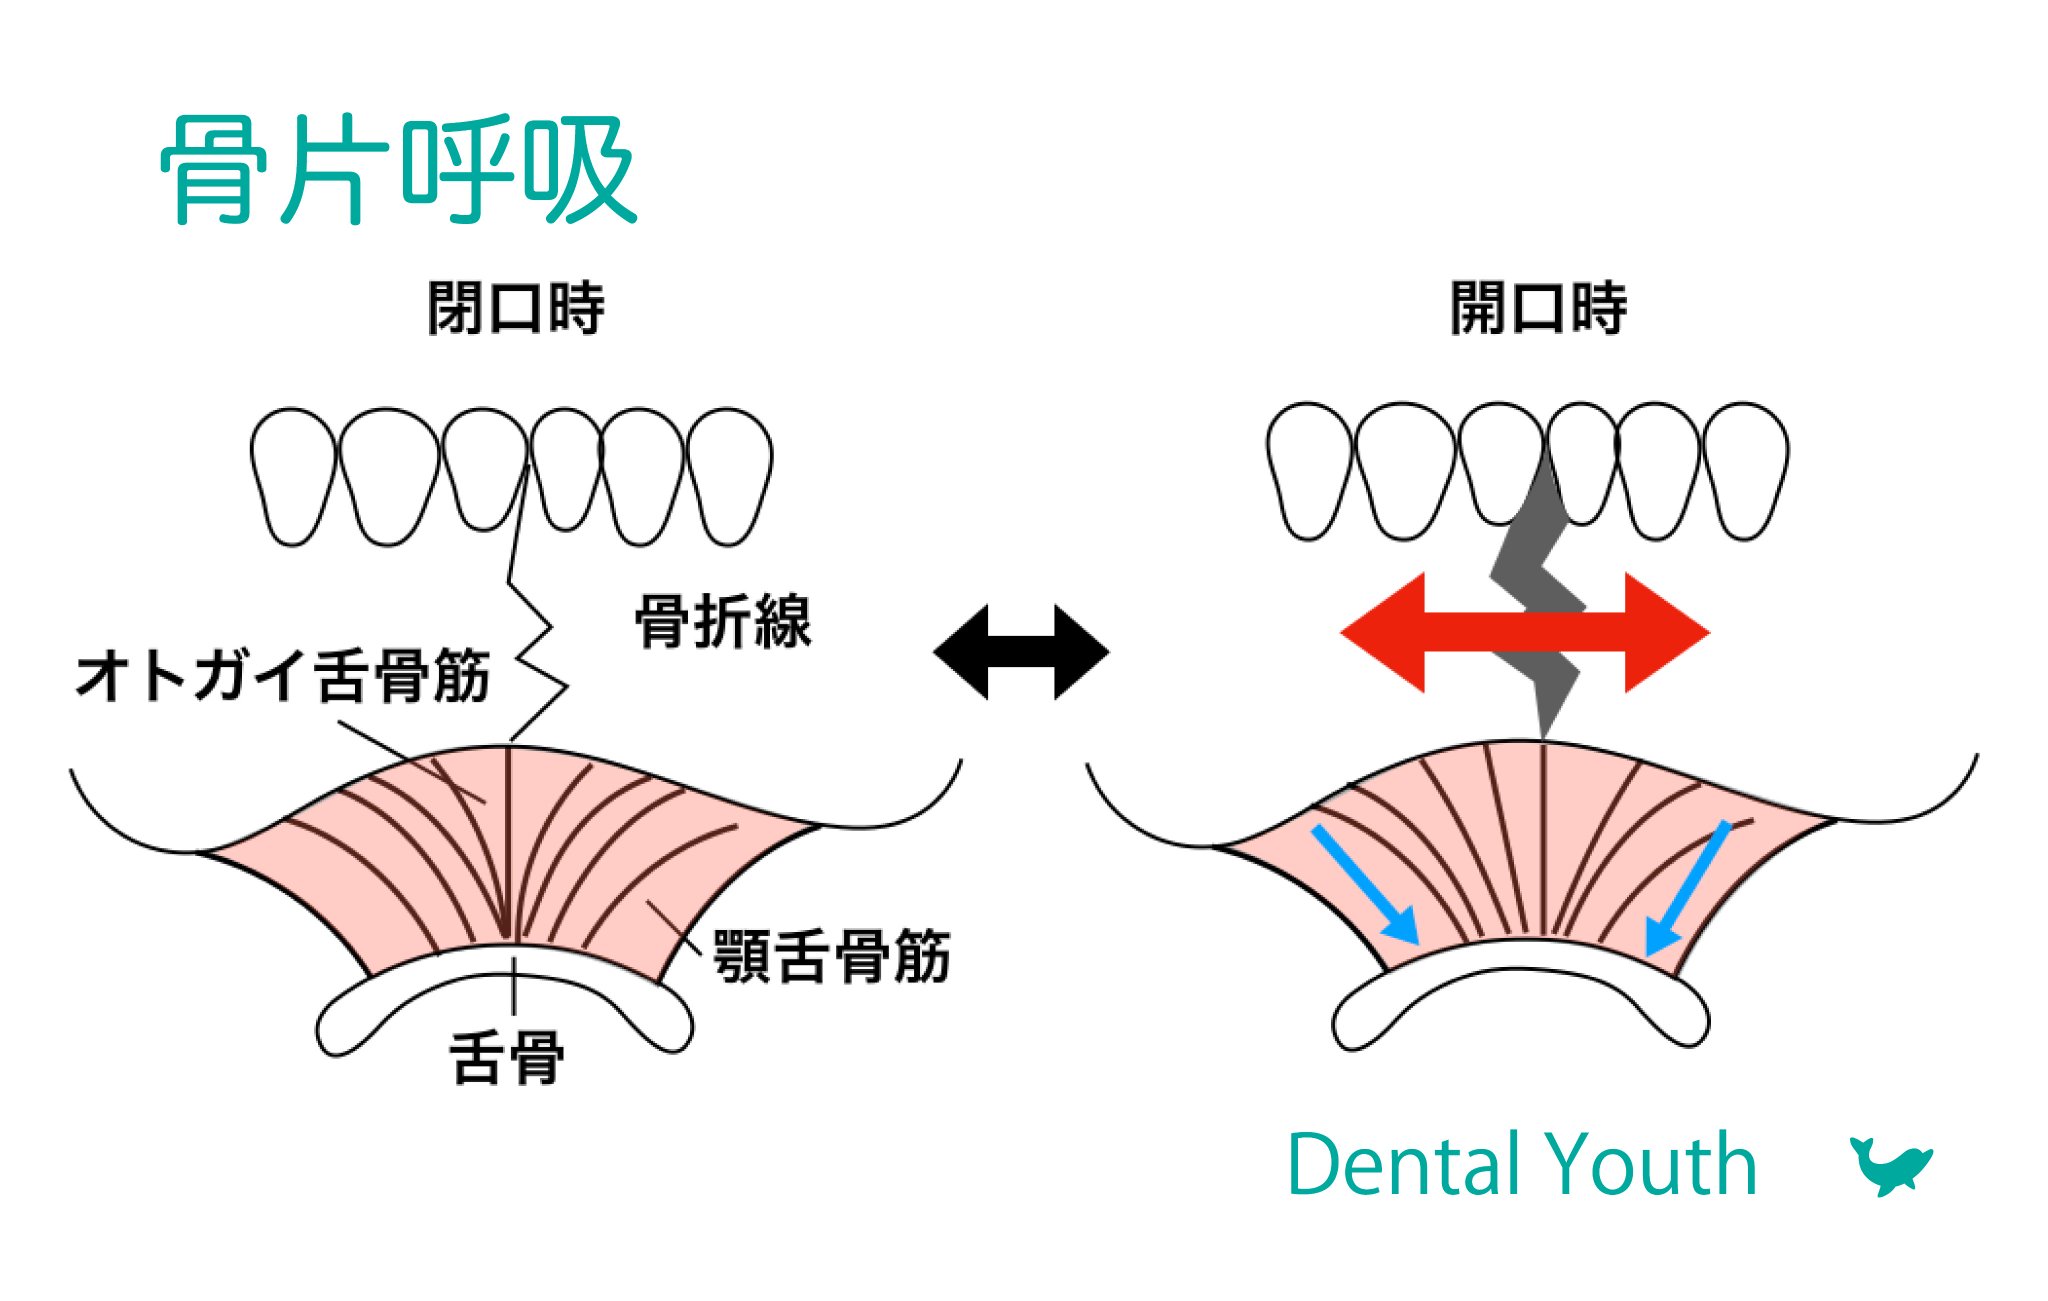 Dental Youth 歯科医師国家試験 Cbt 歯学部向け個別指導塾 Dental Youth Share 骨片呼吸 下顎正中部骨折では 骨片が筋肉に牽引され偏位します 開口時には顎舌骨筋に牽引されて正中離開 閉口時には離開してたものがとじます この